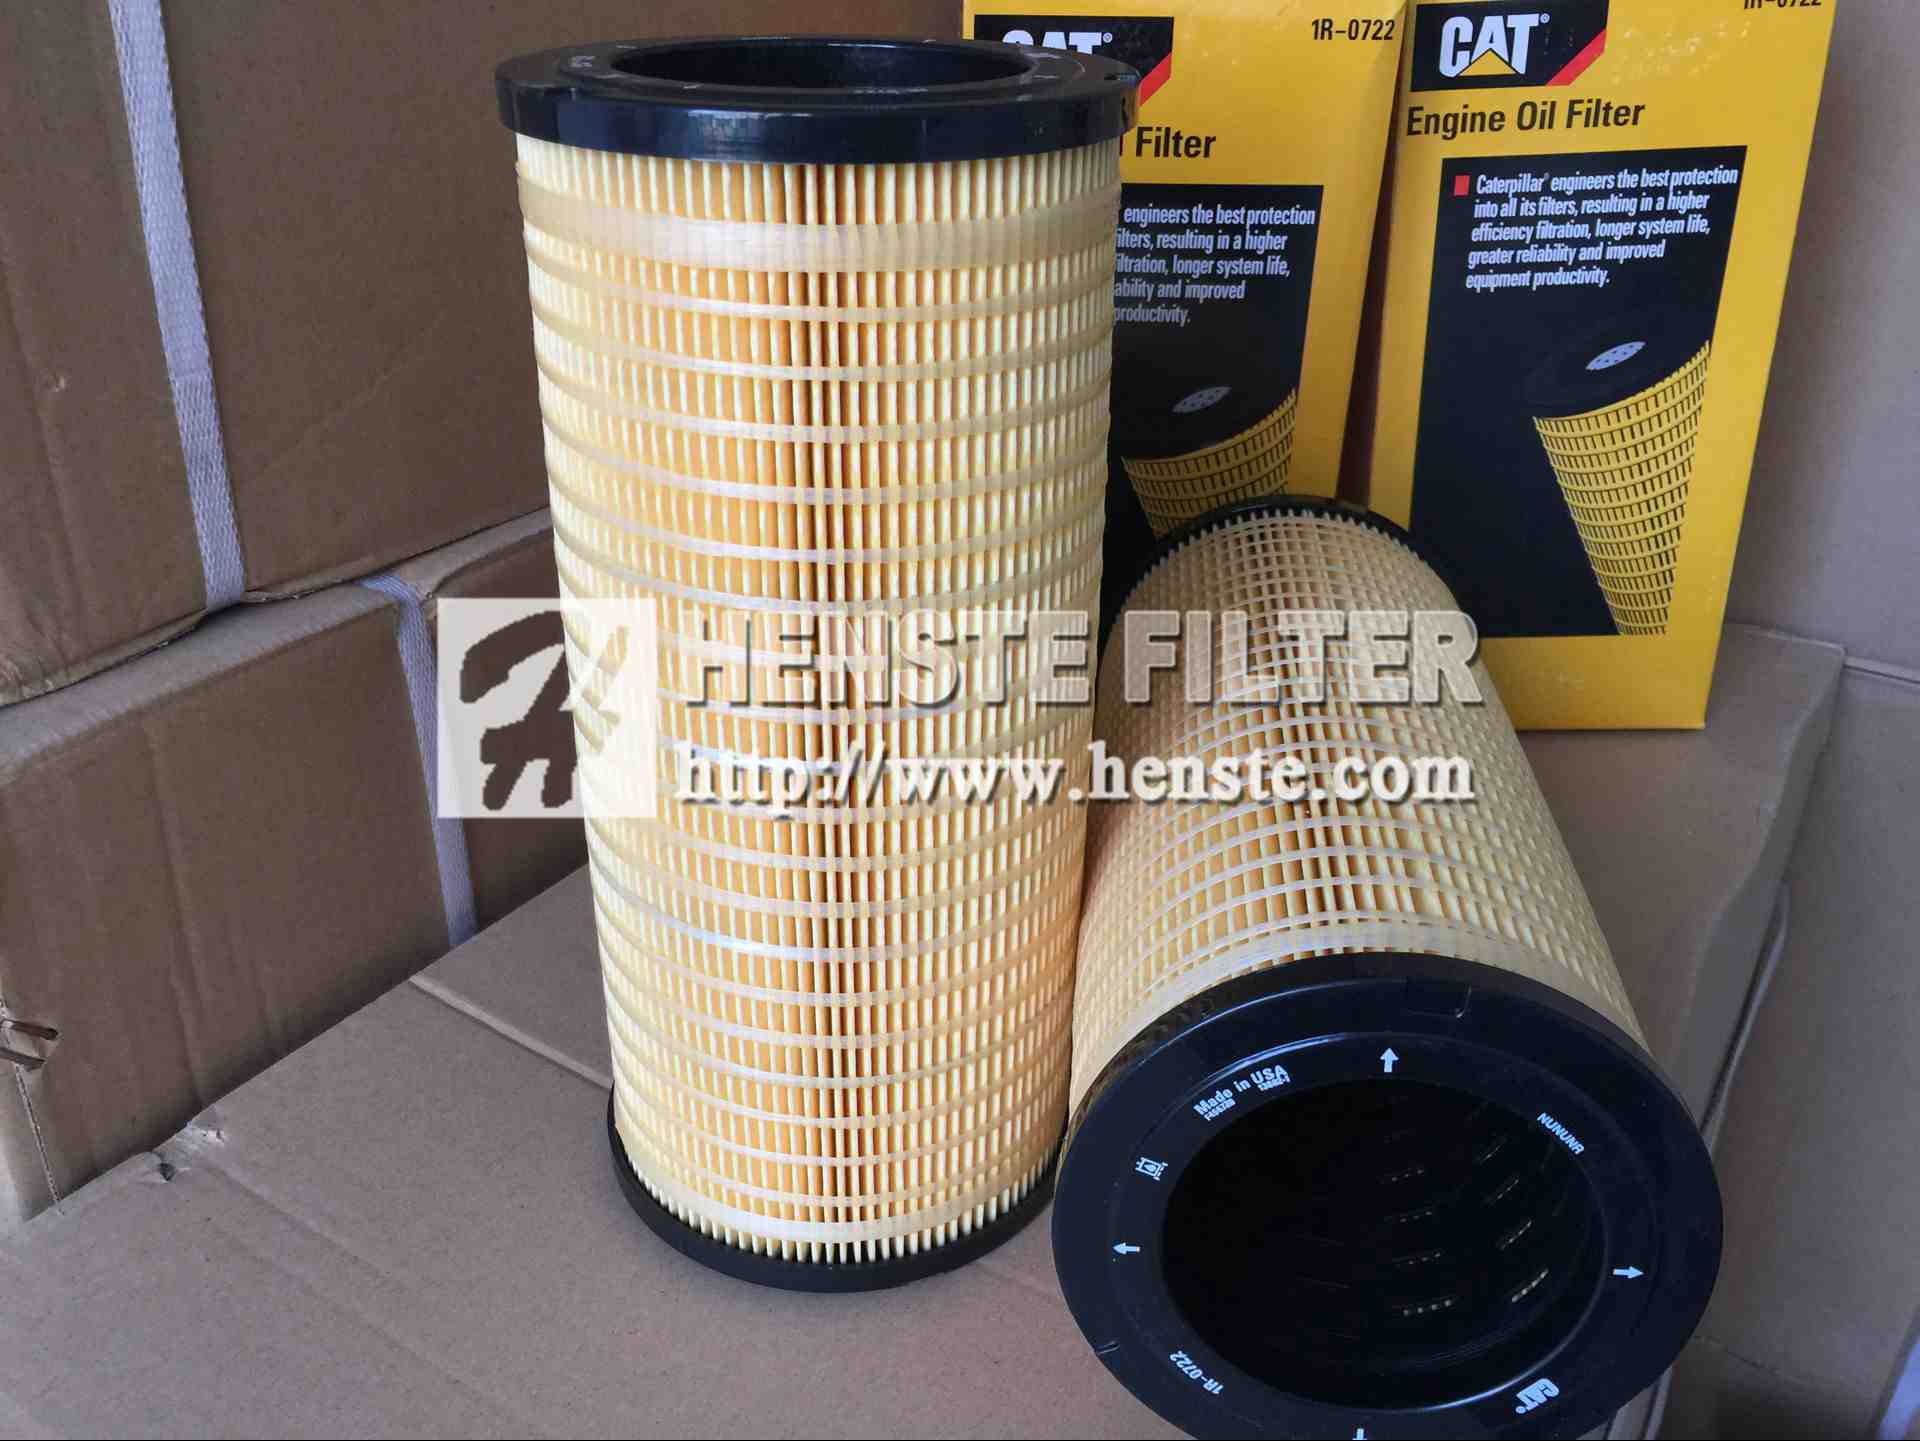 1R0722 1R-0722 CATERPILLAR Hydraulic Filter